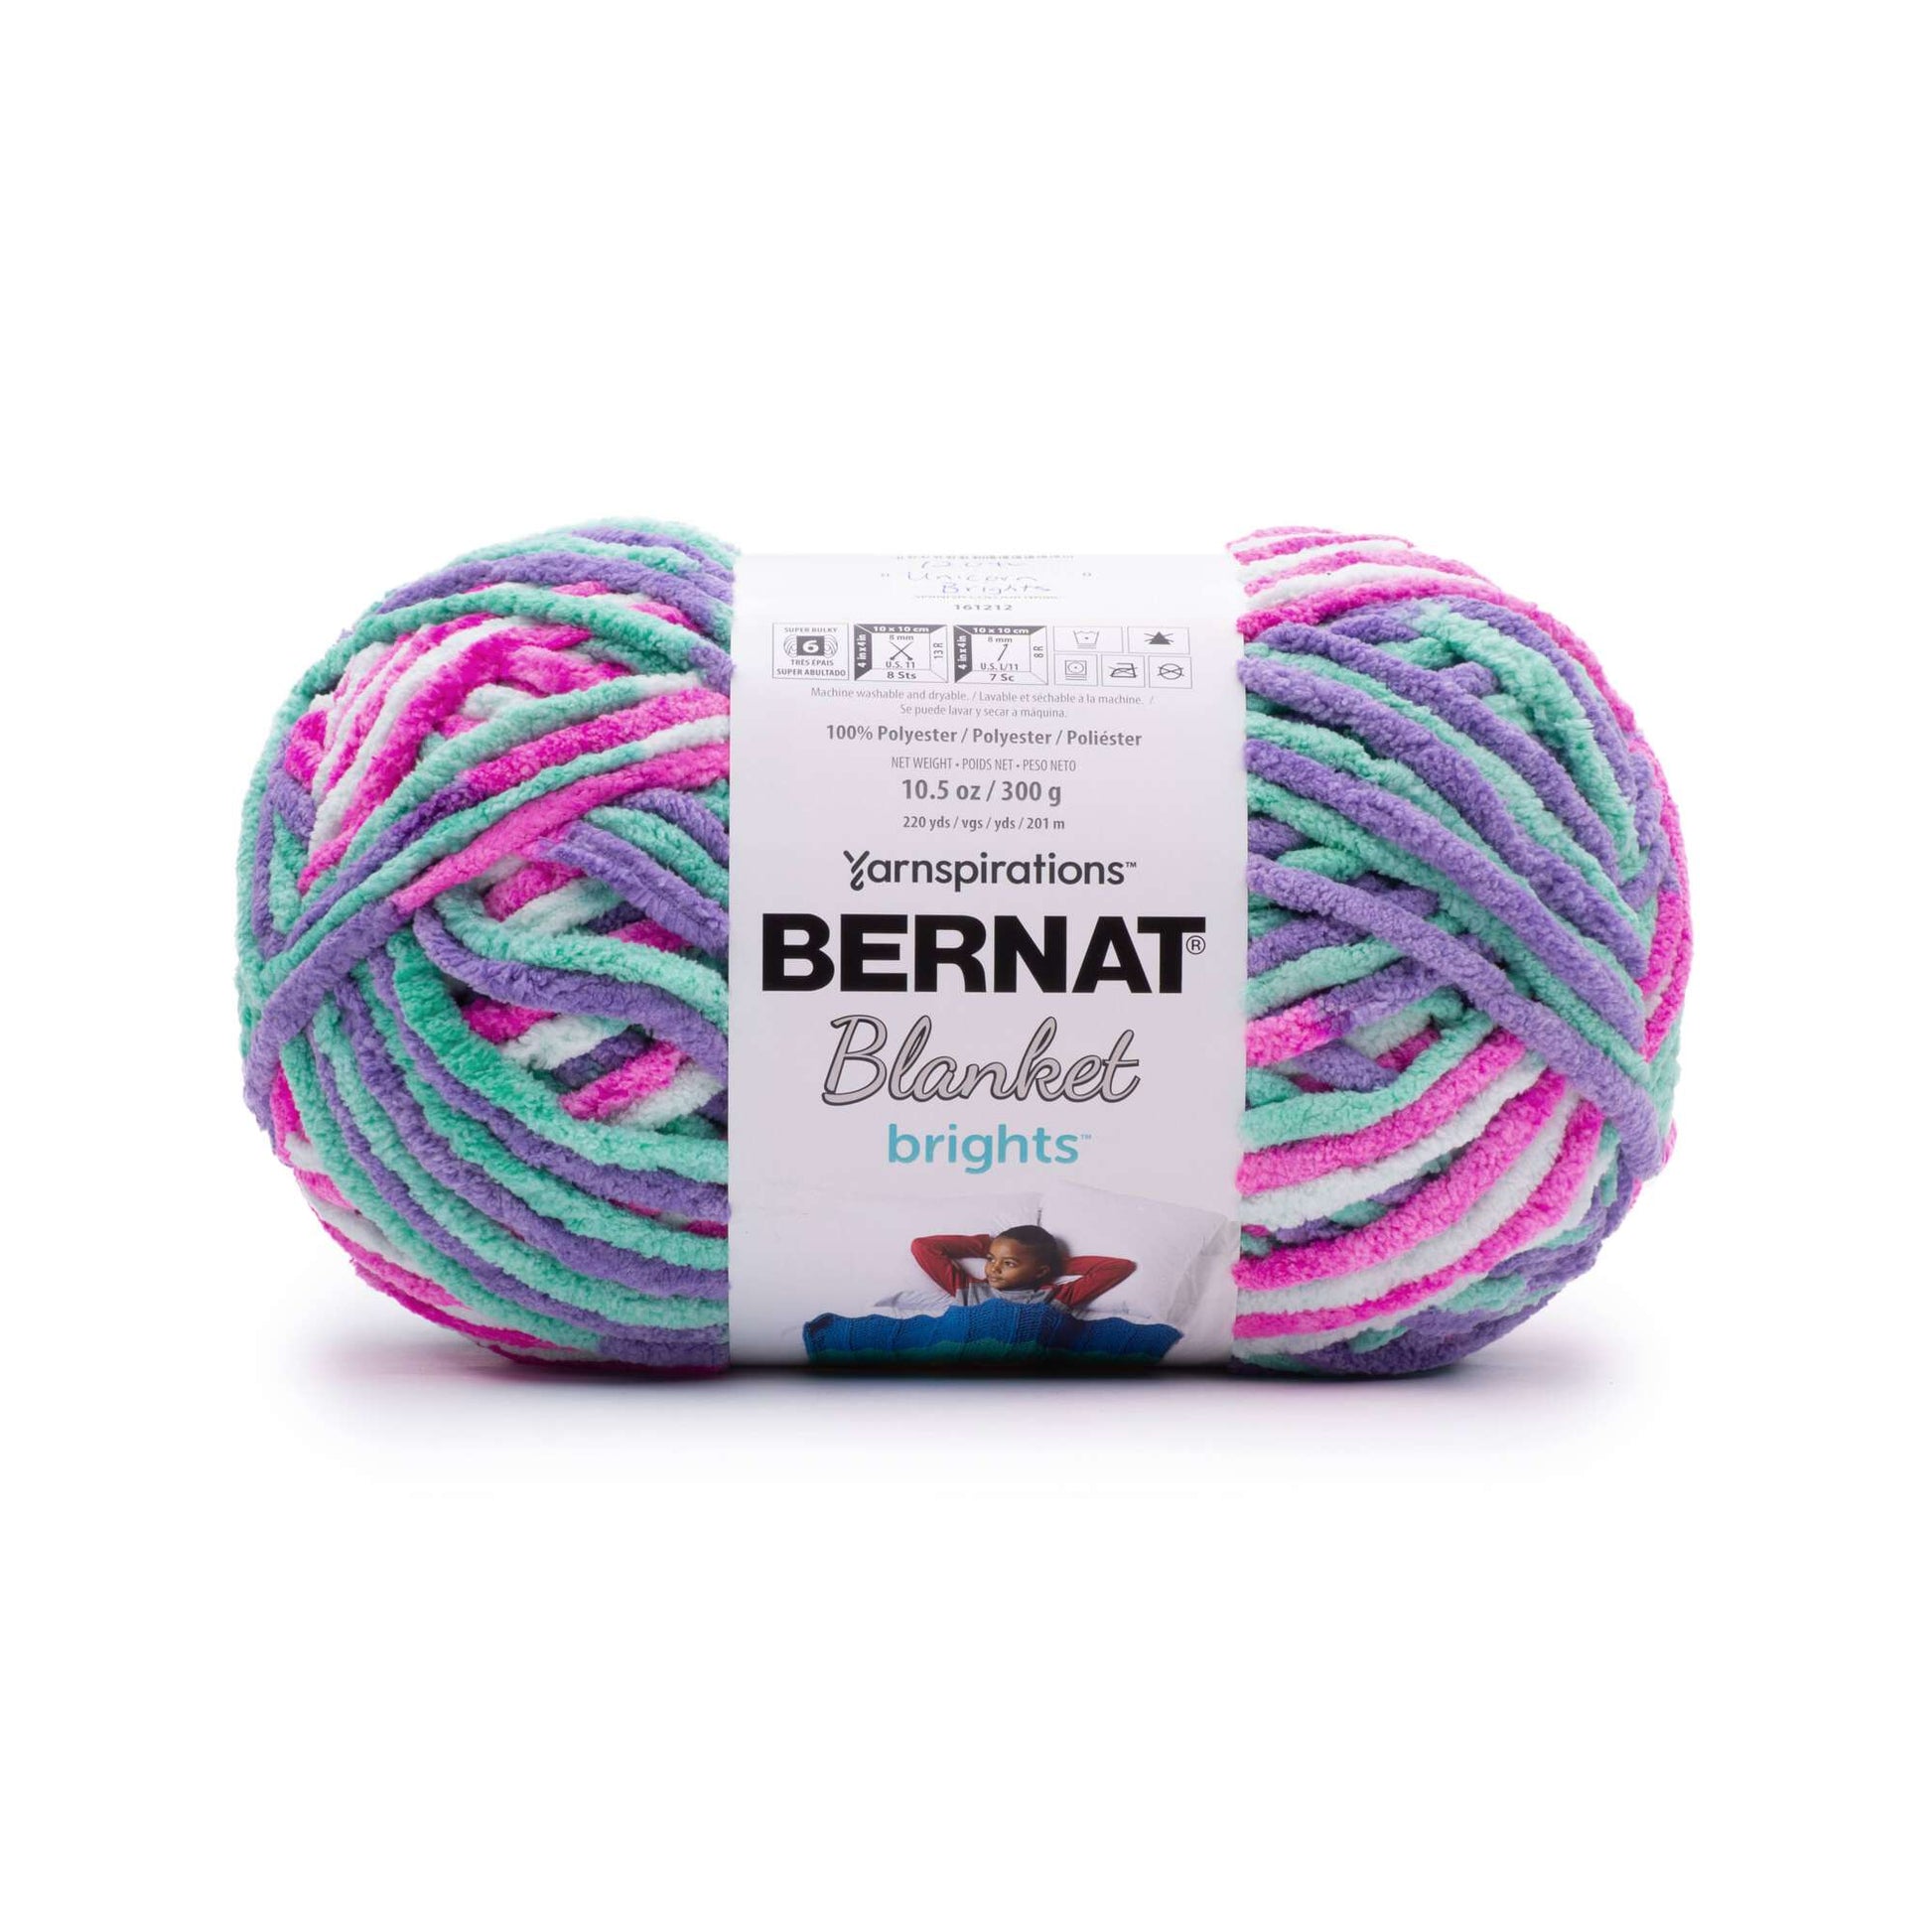 Bernat Blanket Brights Yarn (300g/10.5oz) Unicorn Brights